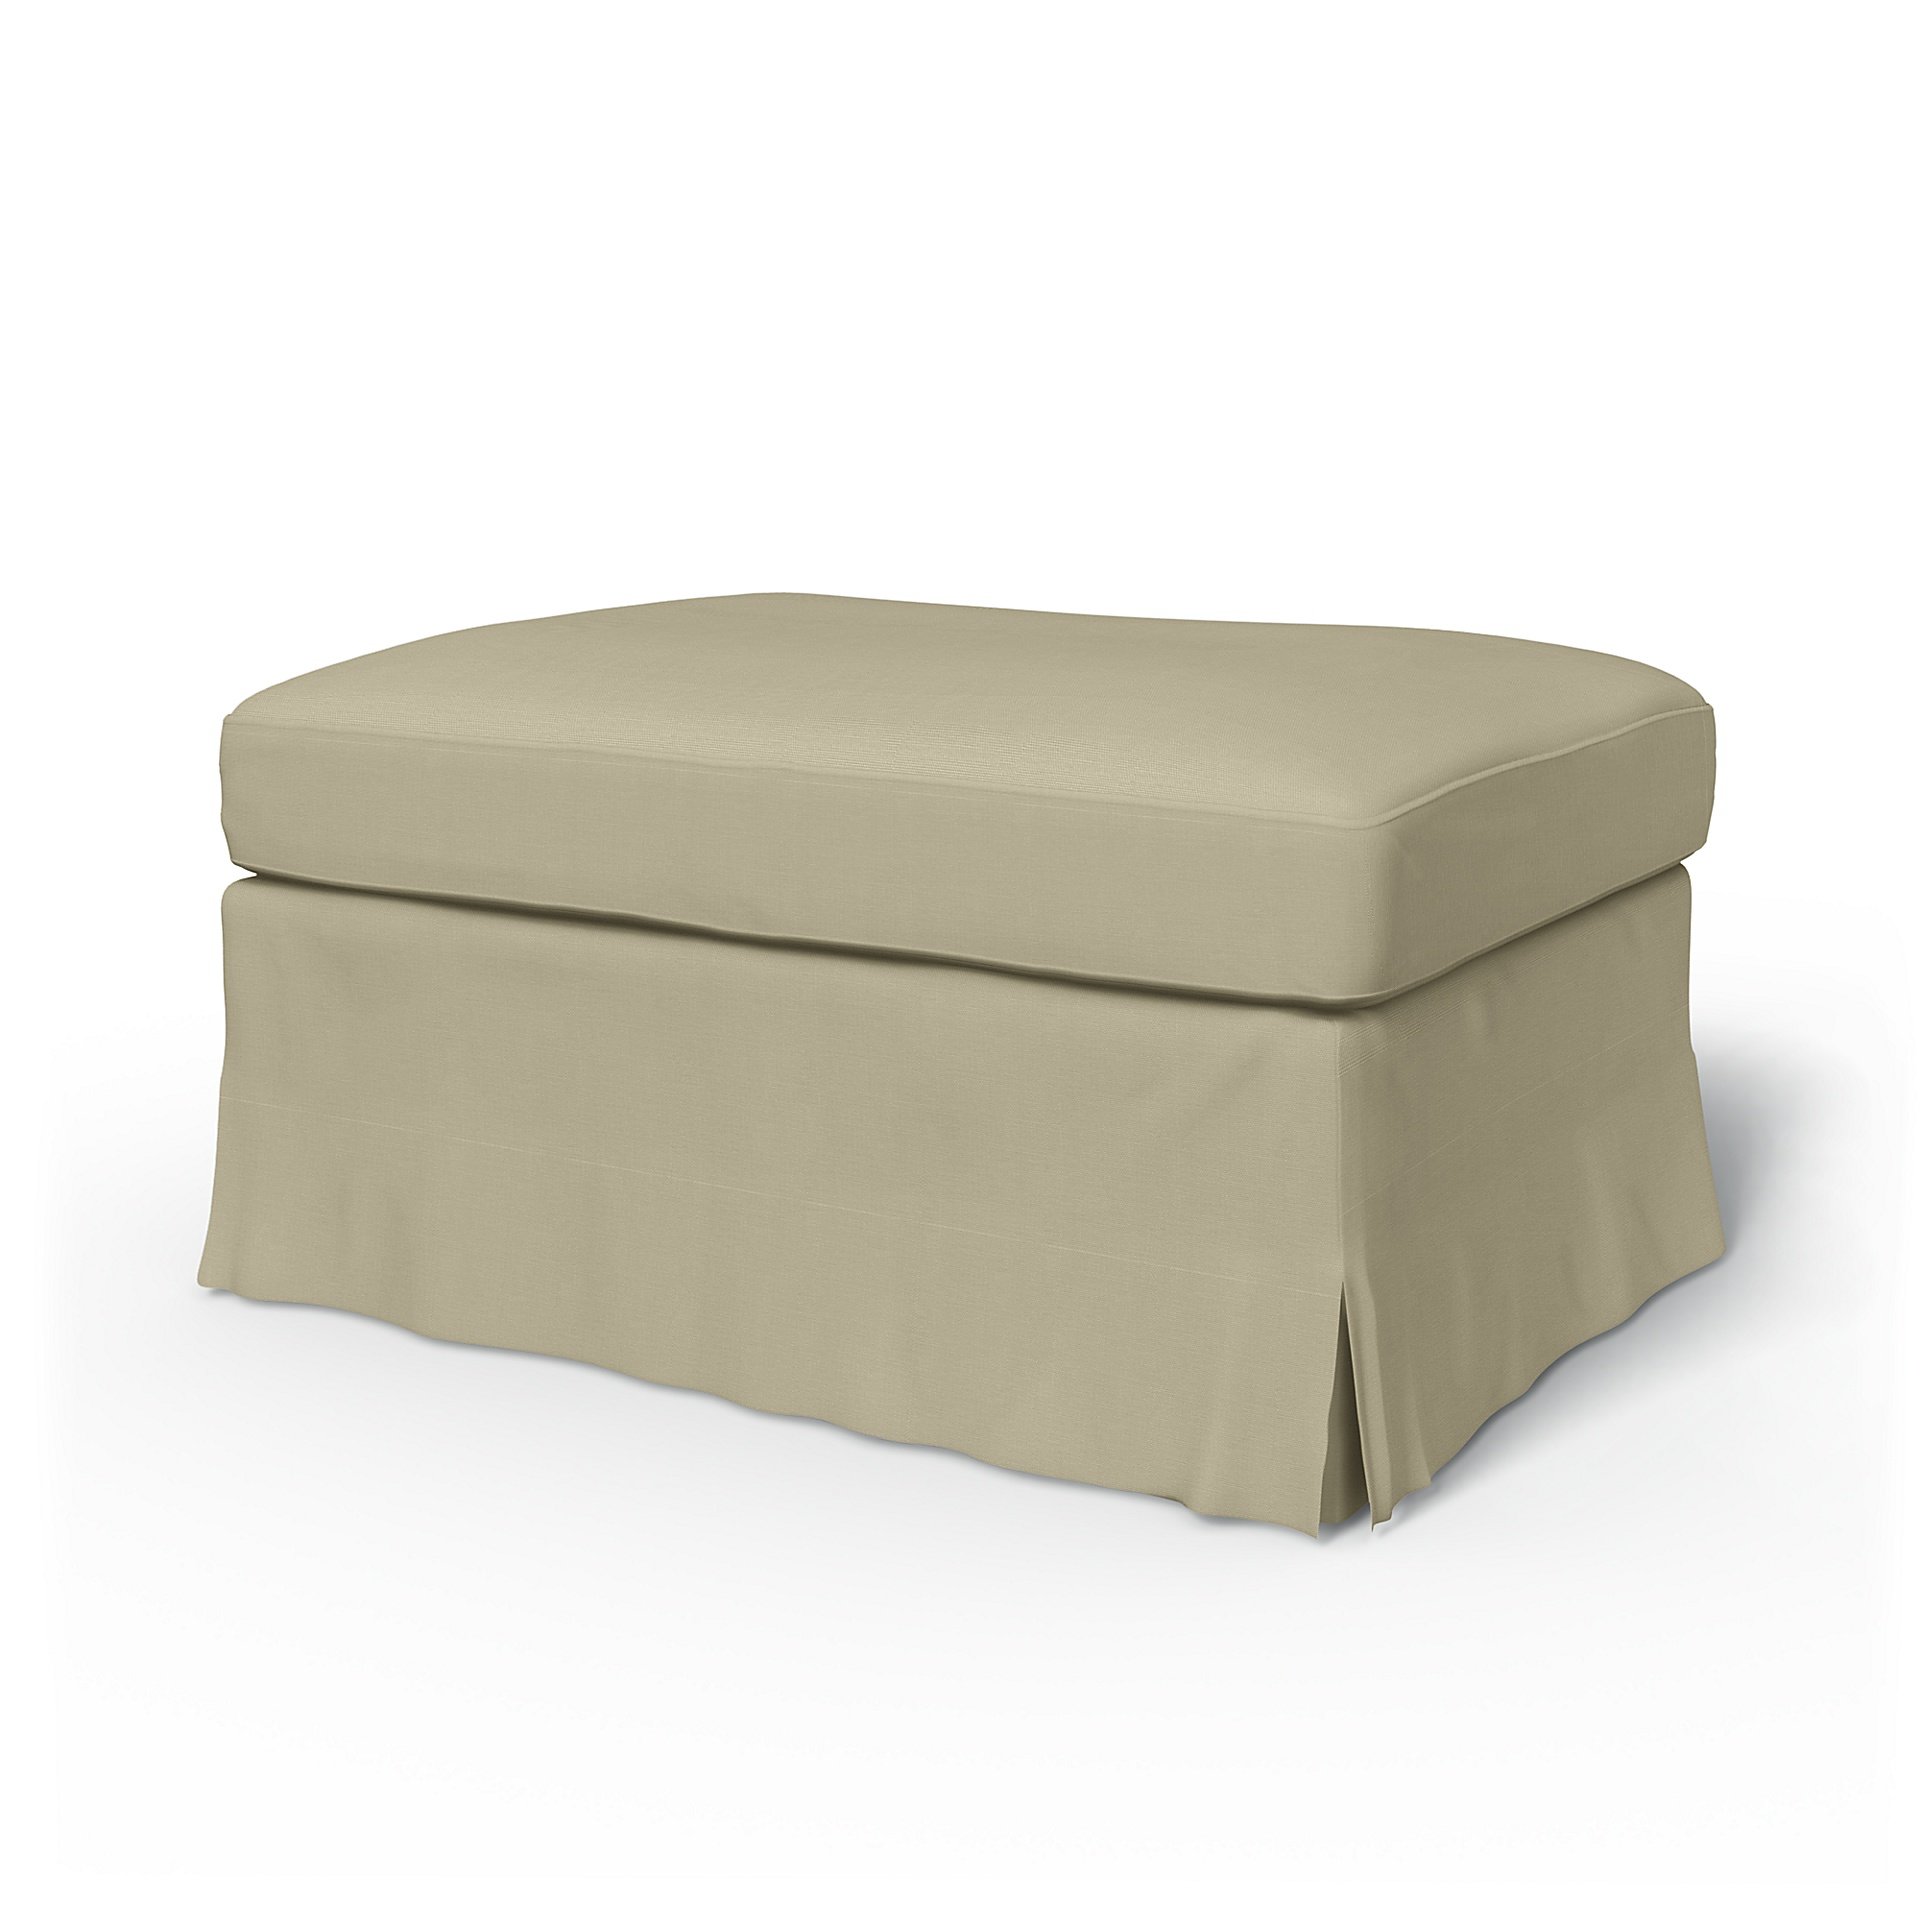 IKEA - Farlov Footstool Cover, Sand Beige, Cotton - Bemz